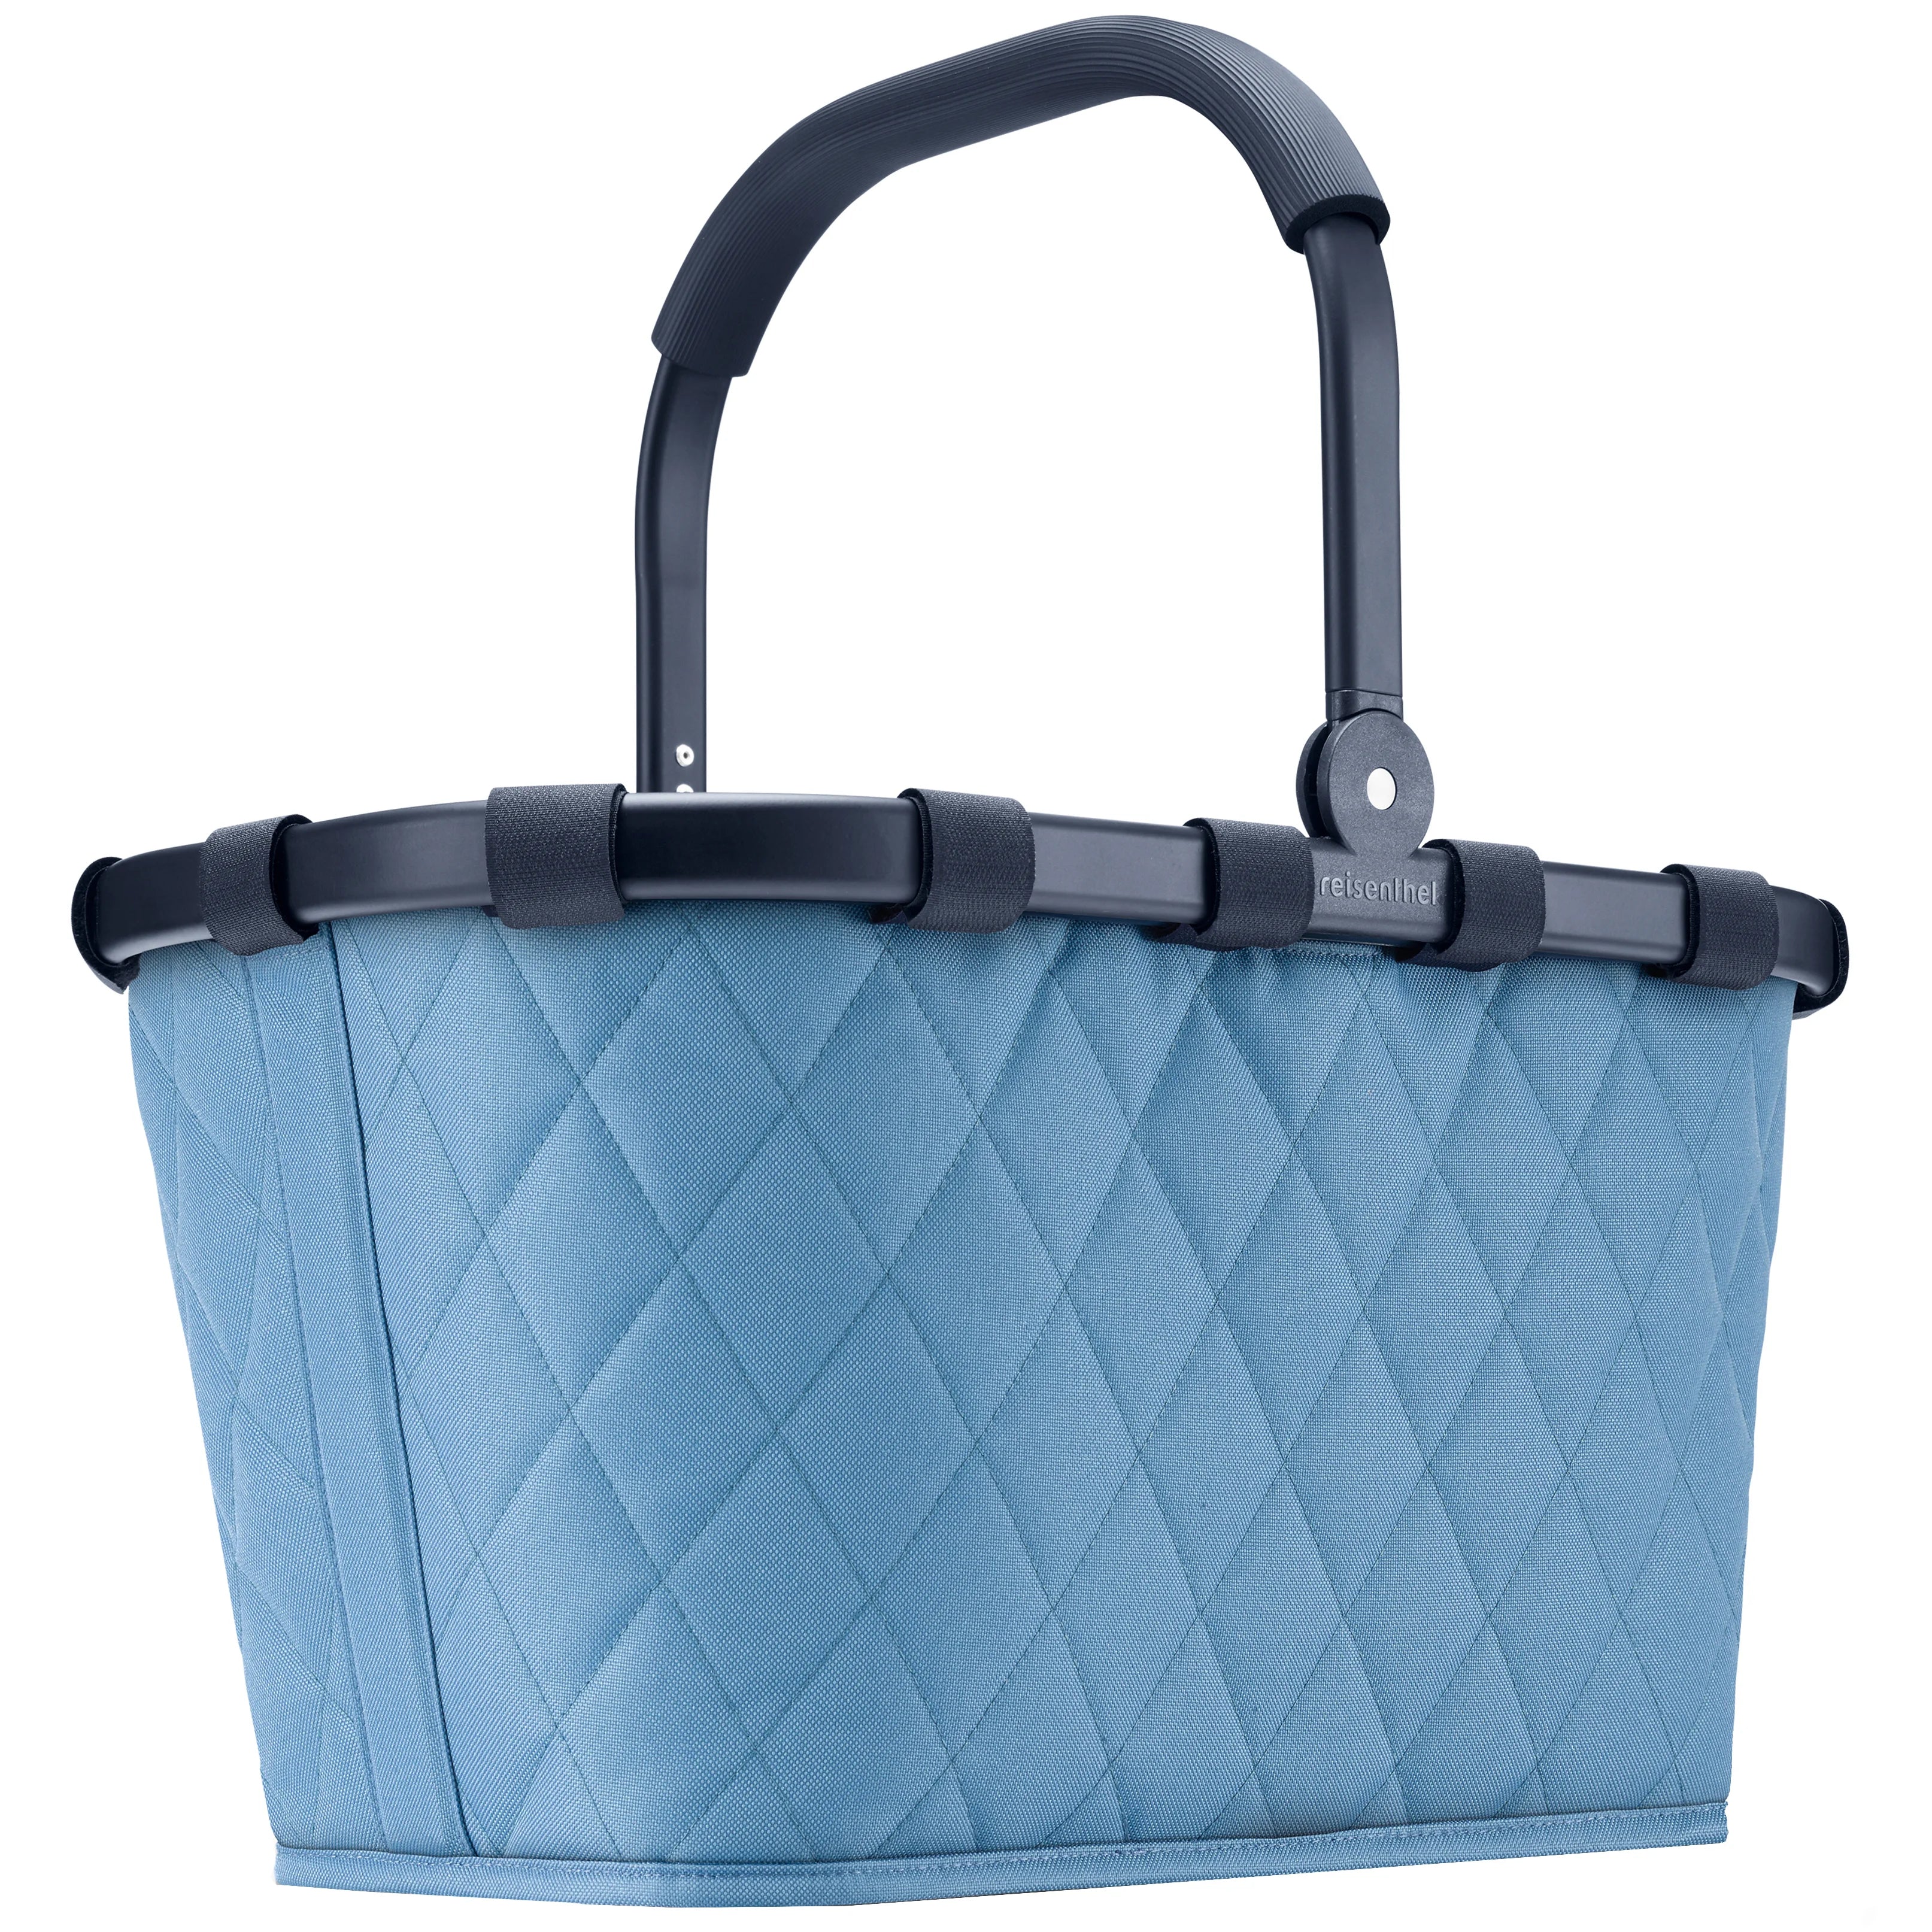 Reisenthel Rhombus Carrybag shopping basket 48 cm - Rhombus Blue